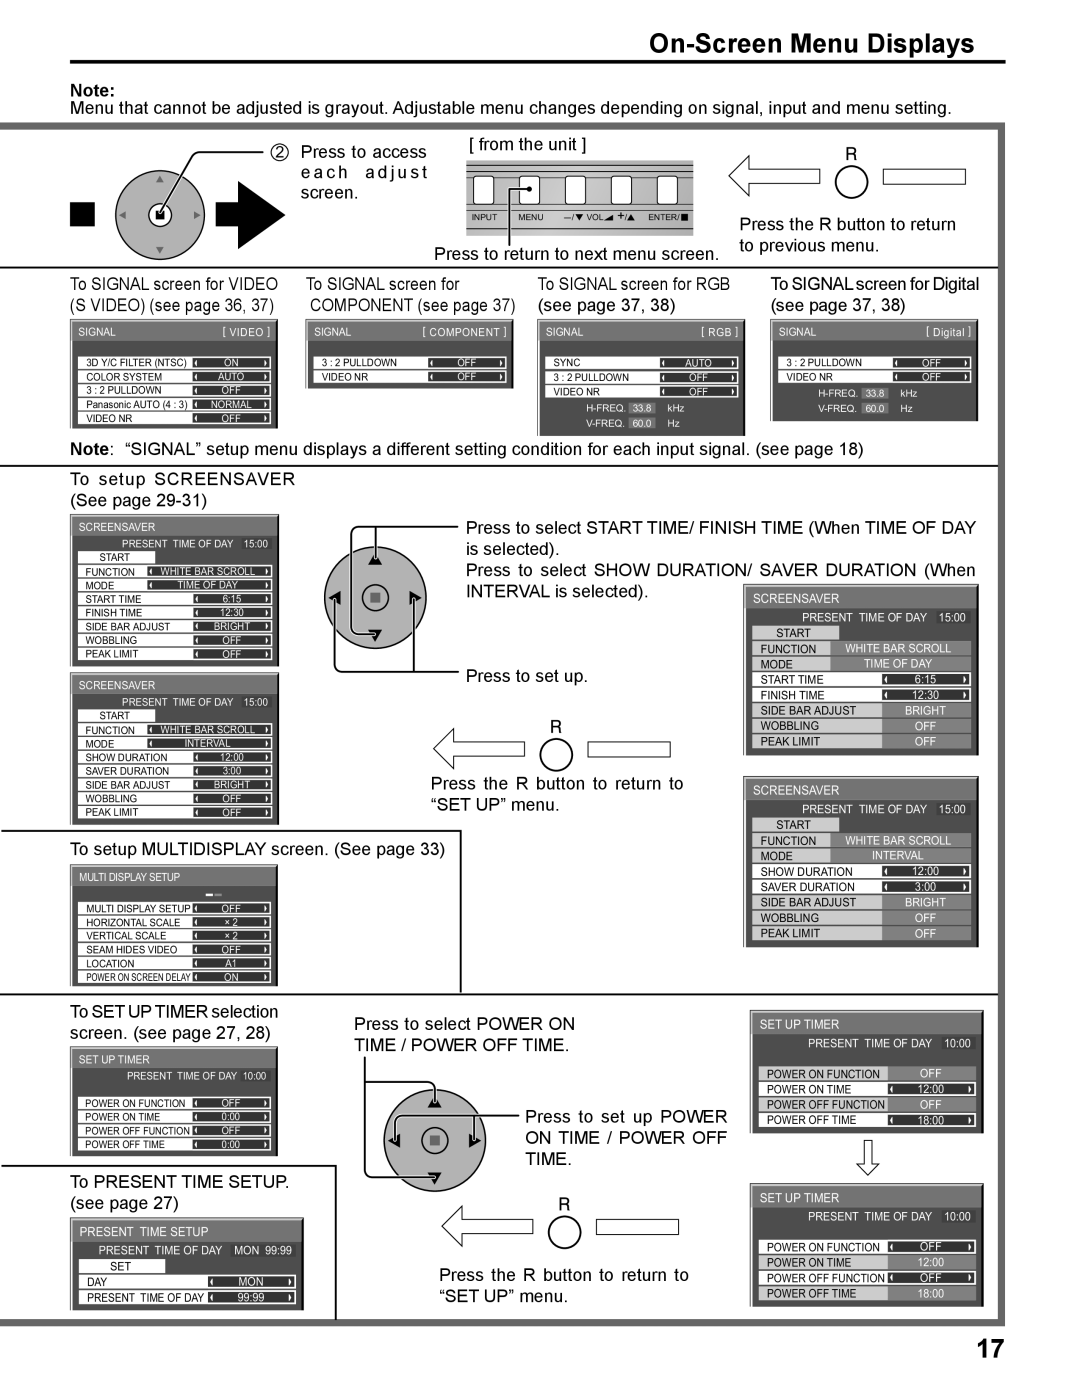 Panasonic TH-37PH10UK manual On-Screen Menu Displays, Press the R button to return to, “SET UP” menu 